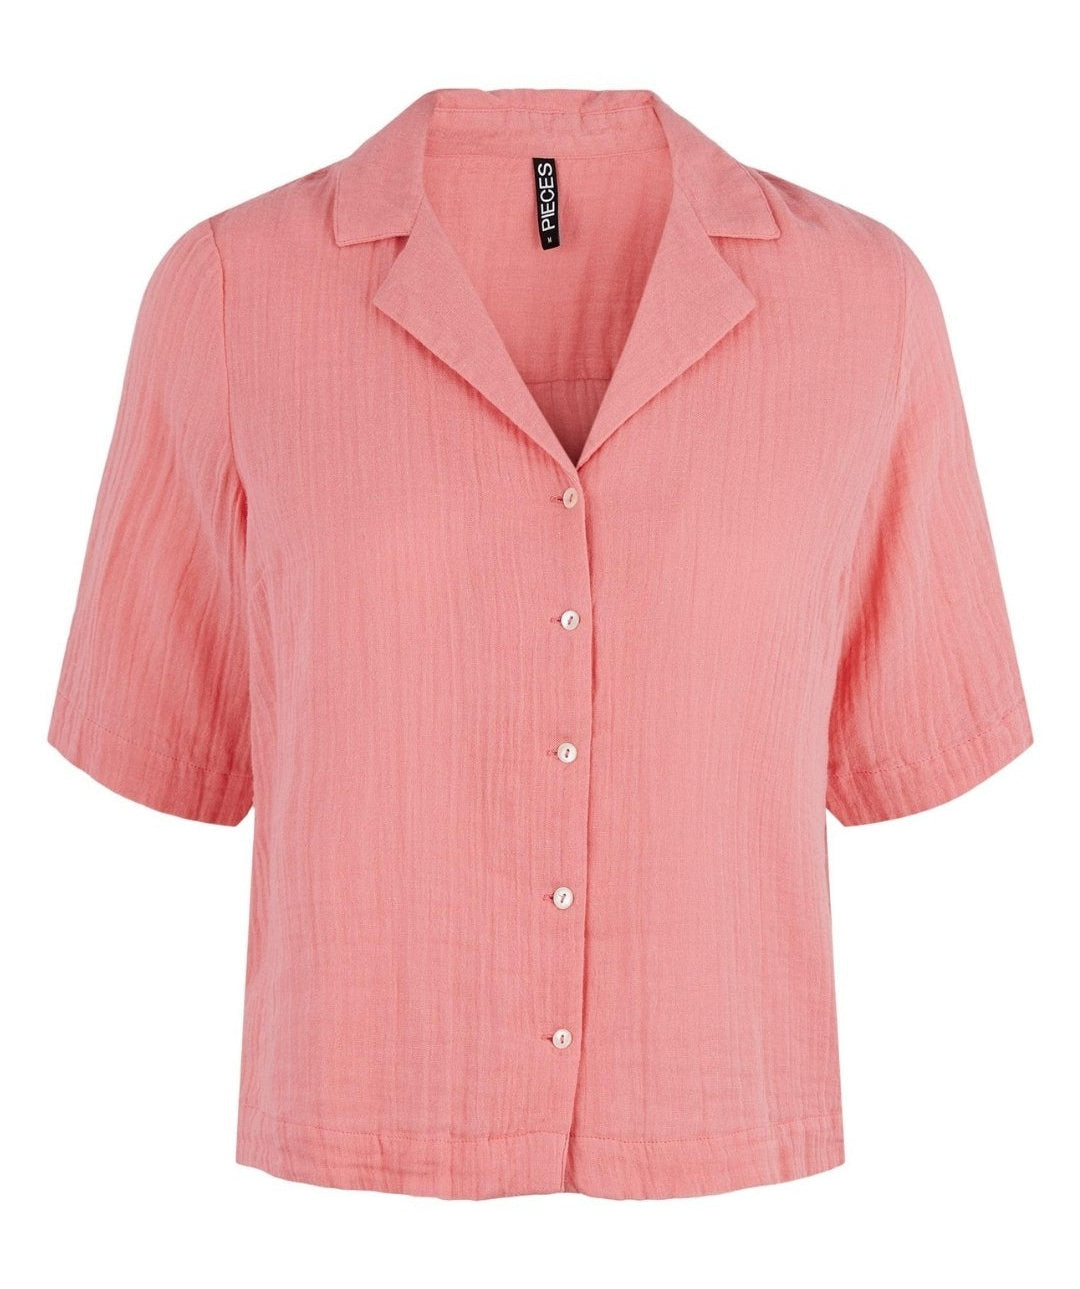 Pieces - Stina 2/4 Shirt (Strawberry Pink)